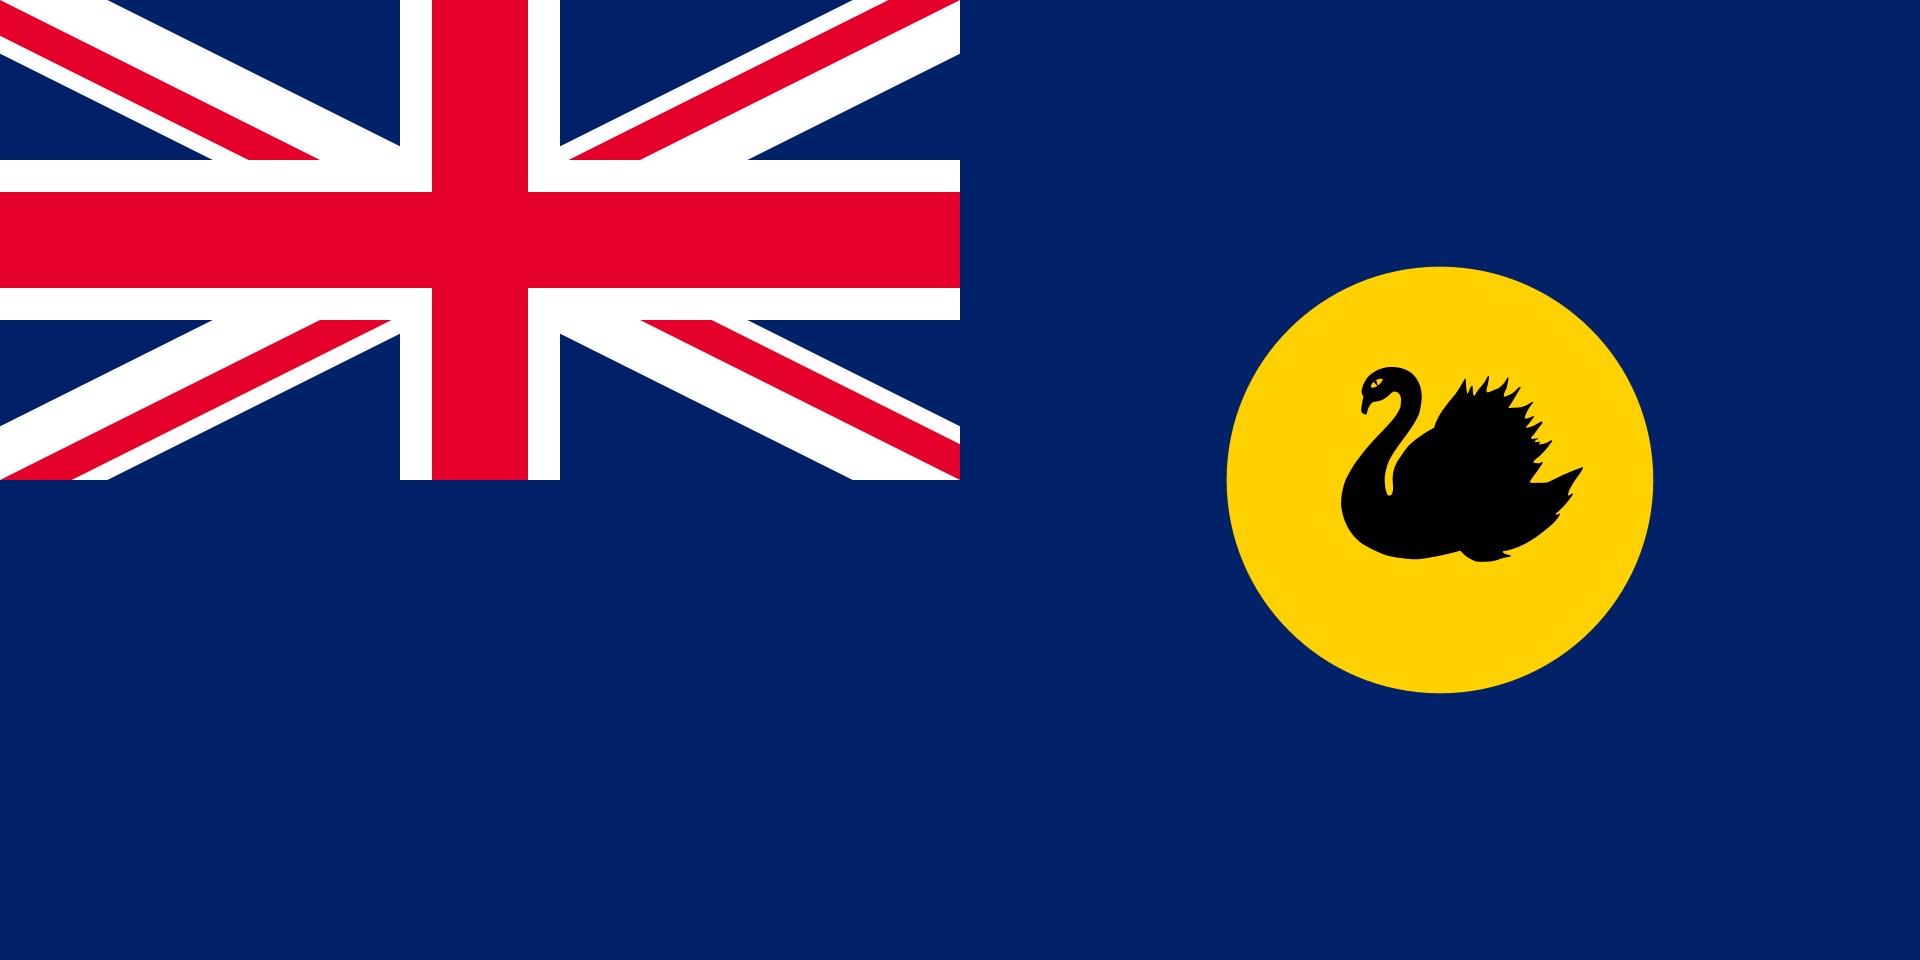 Western Australia Flag 4ft 6in x 2ft 3in